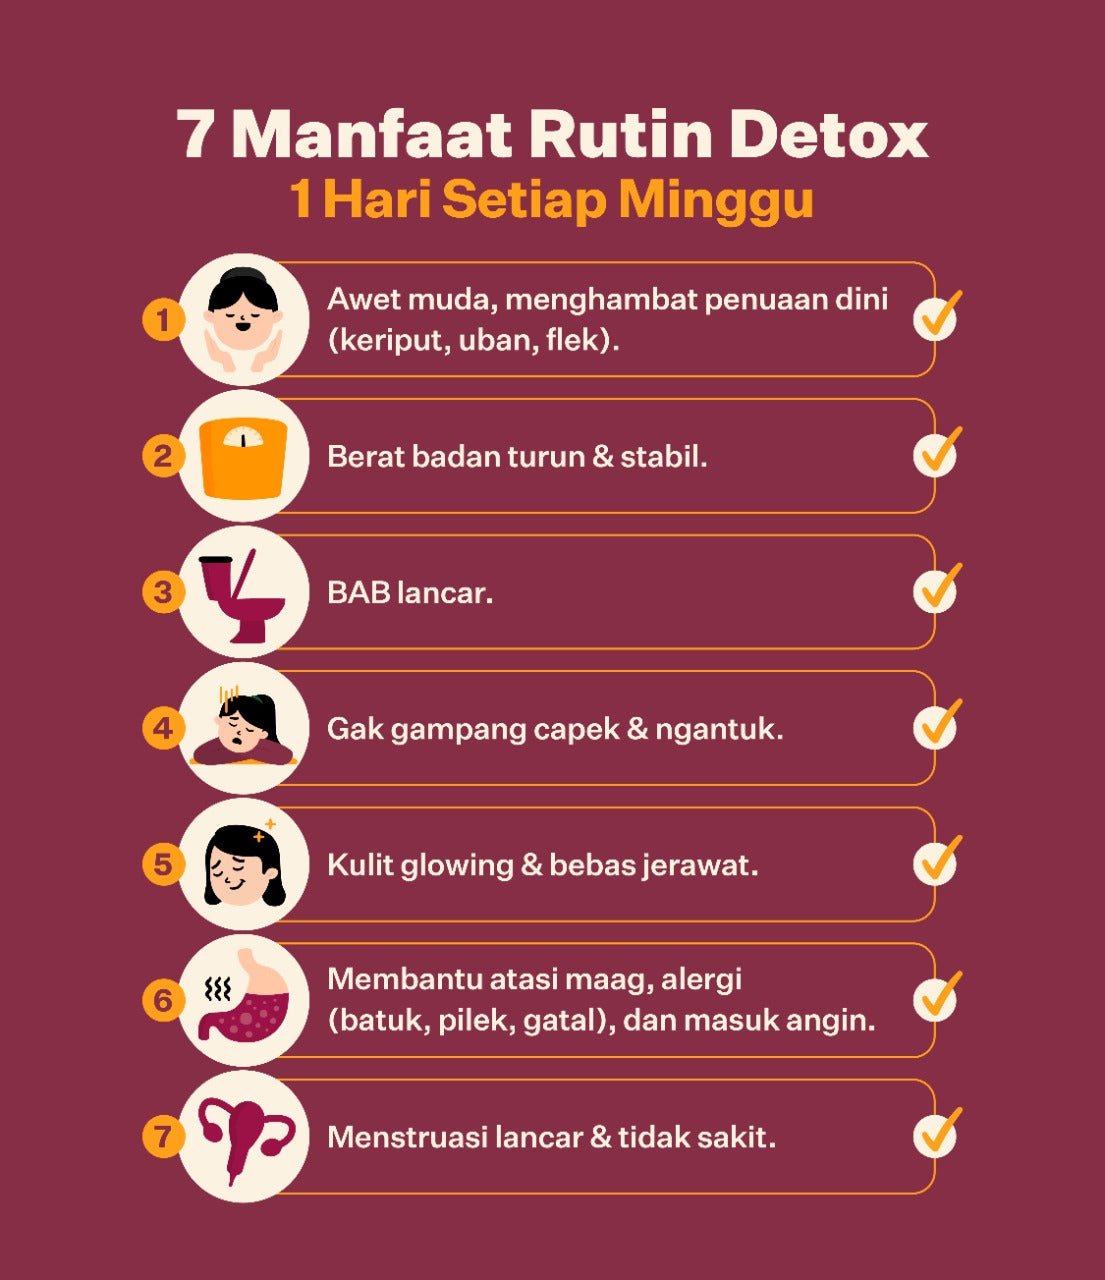 Manfaat Rutin Detox